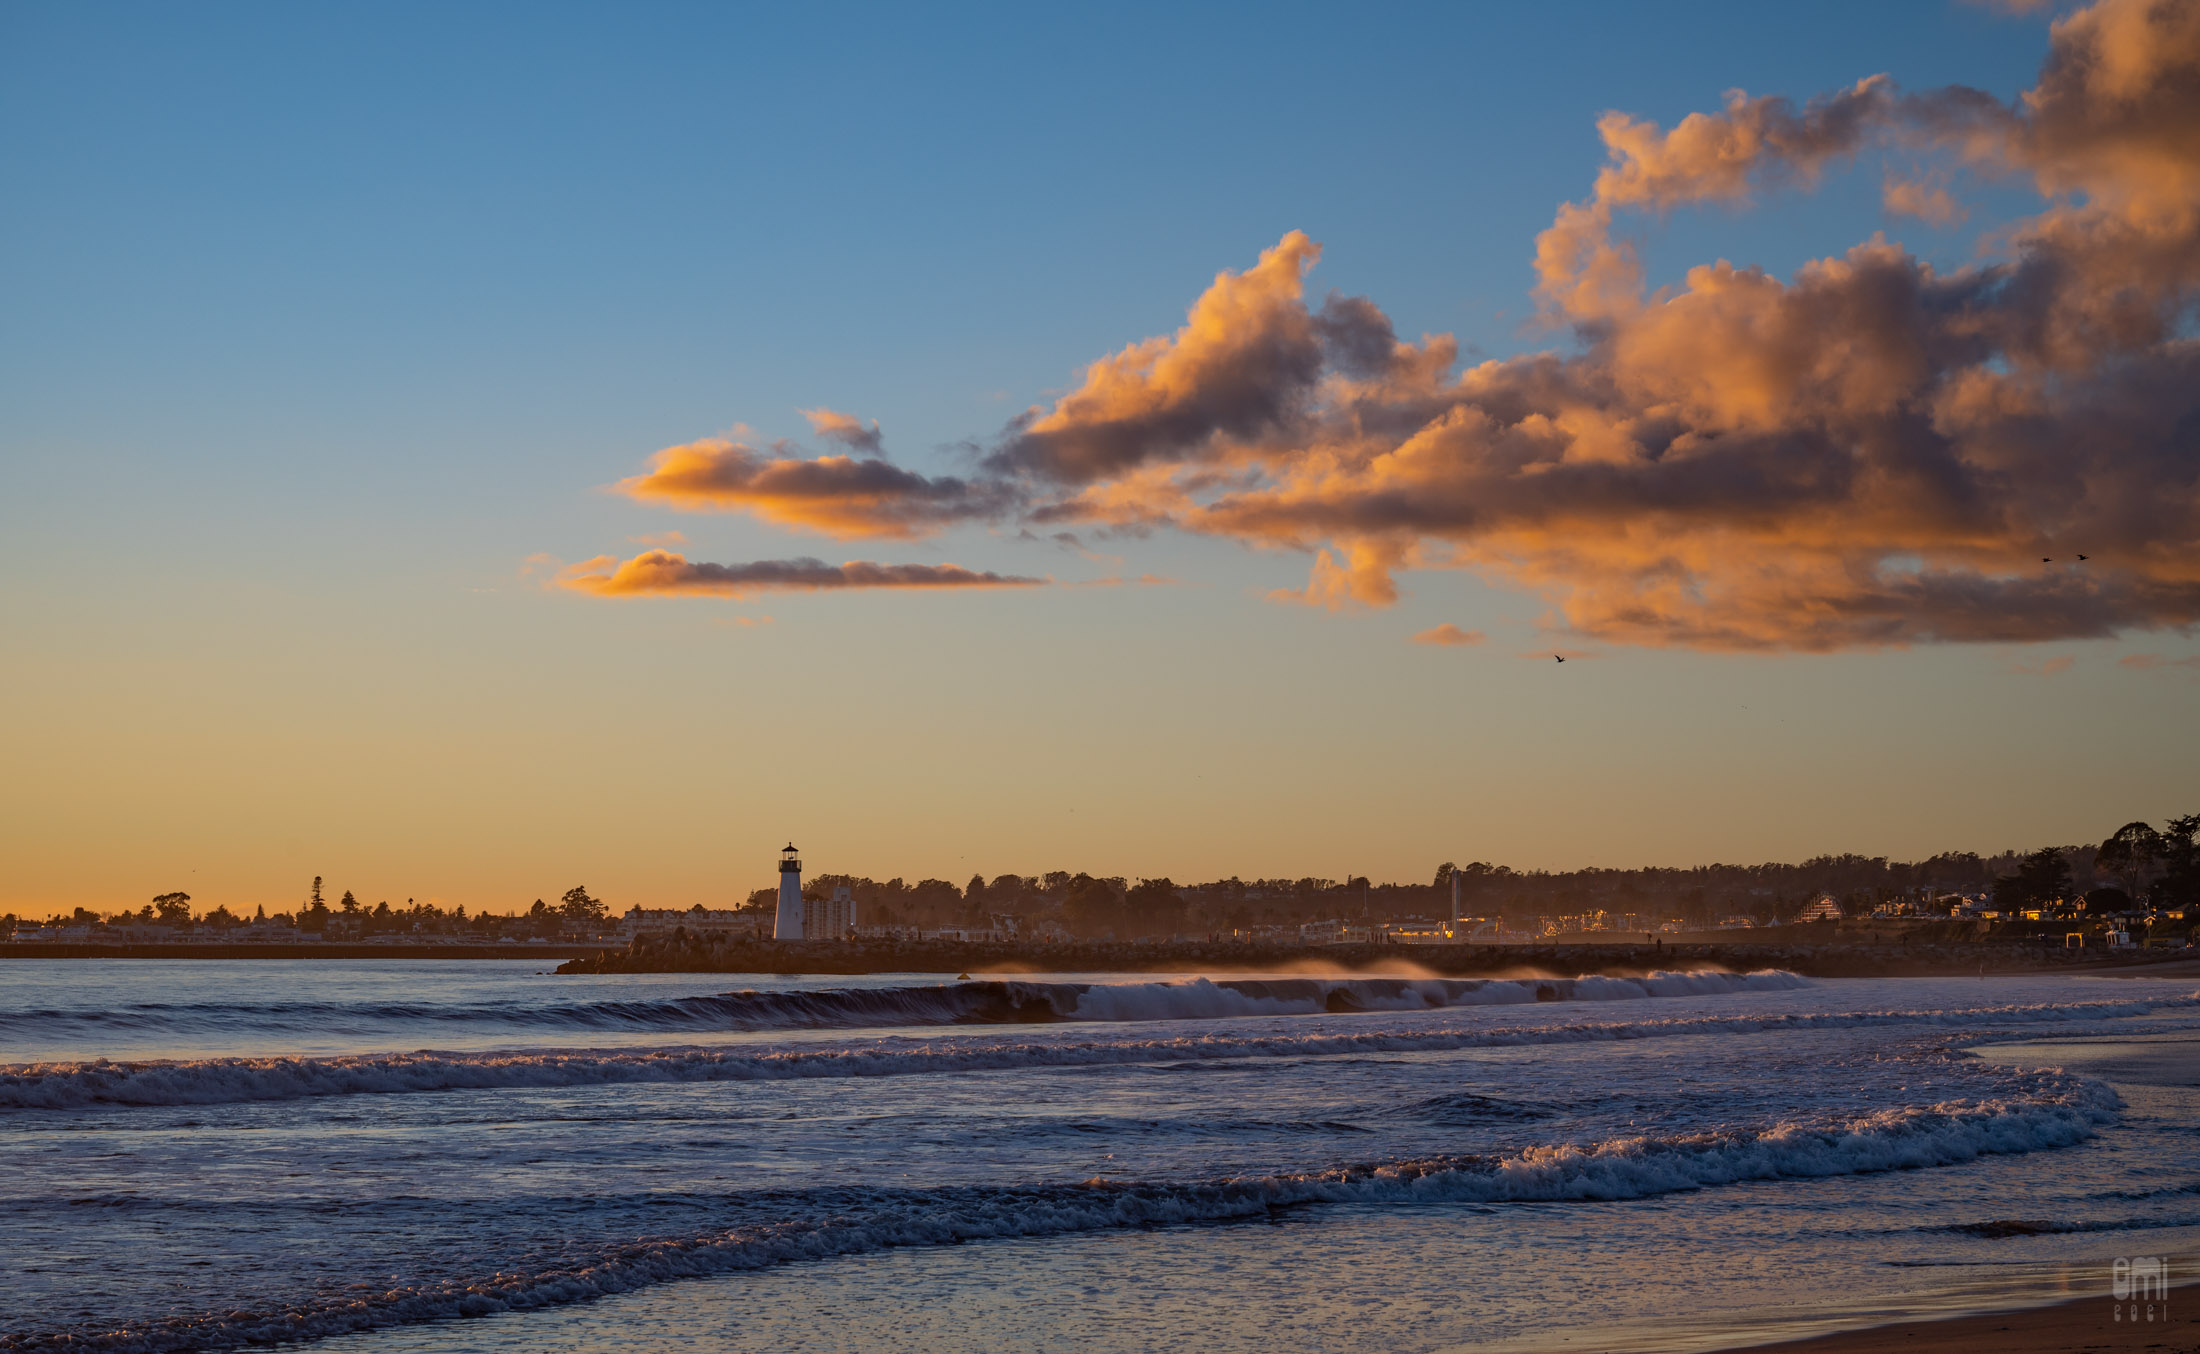 20211227 Sunset at Santa Cruz Breakwater Lighthouse Walton at Twin Lakes State Beach, Santa Cruz, CA photo by emi